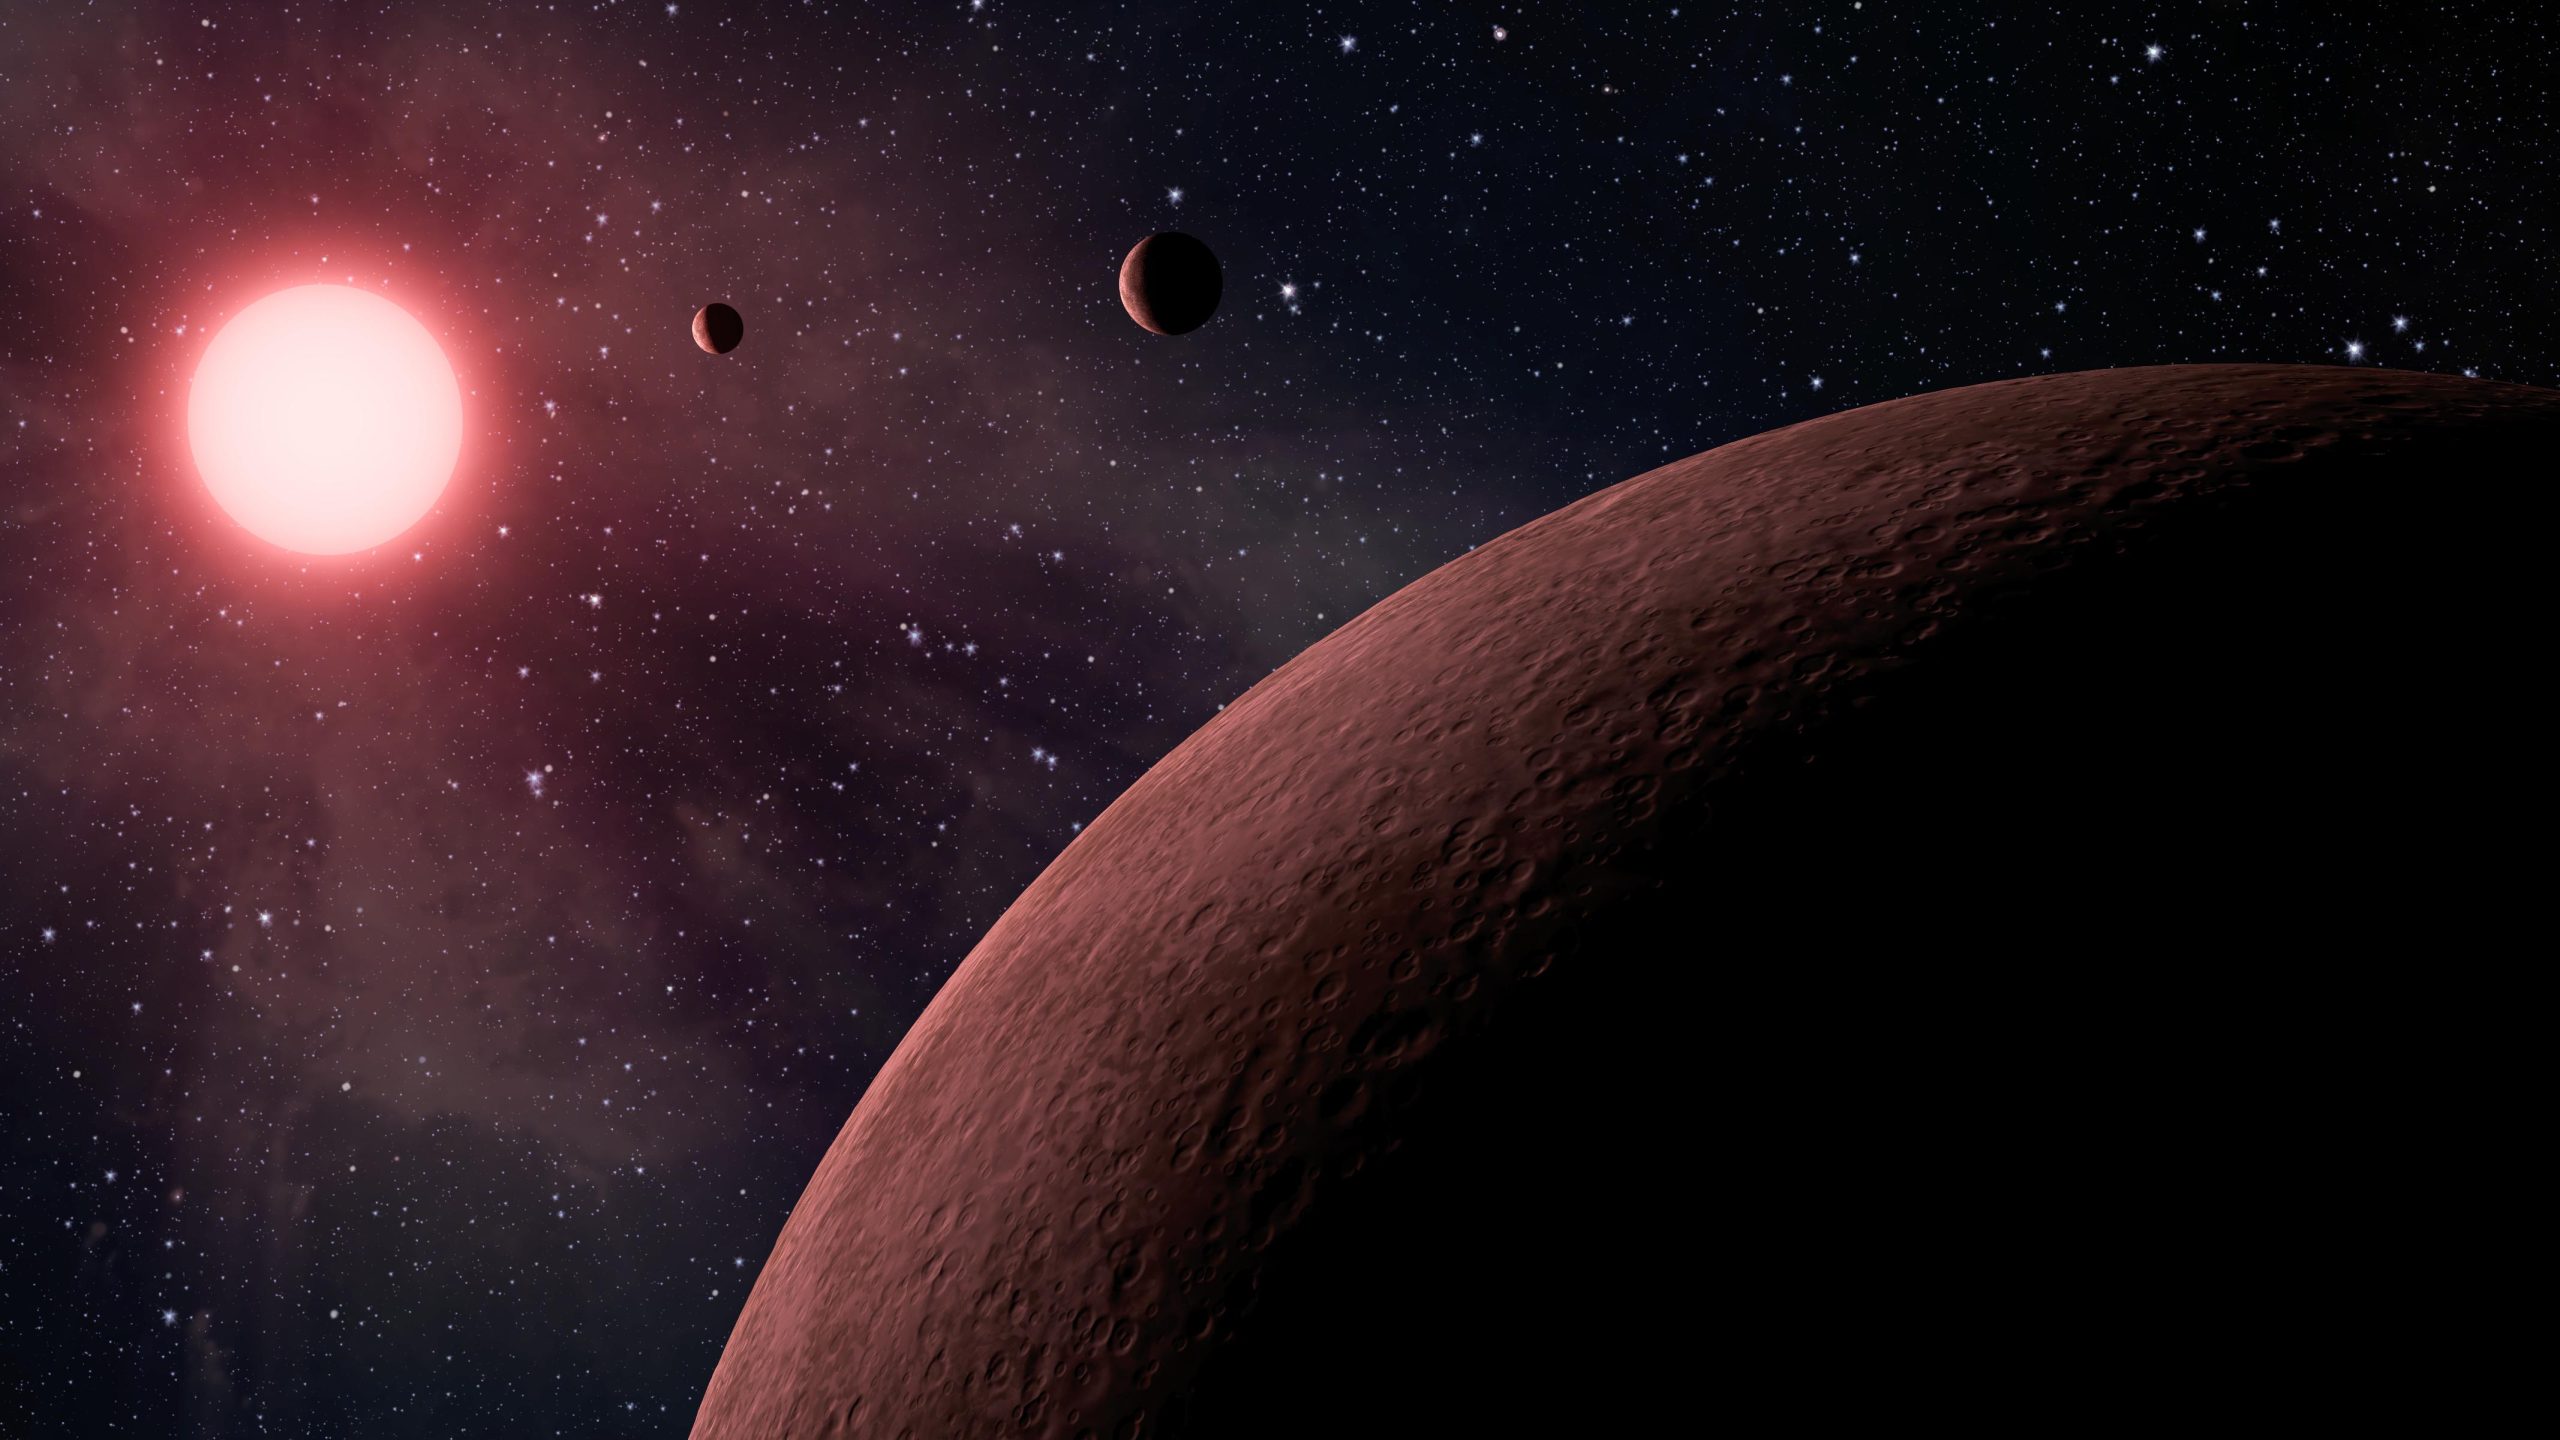 Aστρονόμοι εντόπισαν σύστημα με τρεις πλανήτες στο μέγεθος της Γης – Ενδέχεται να φιλοξενούν ζωή